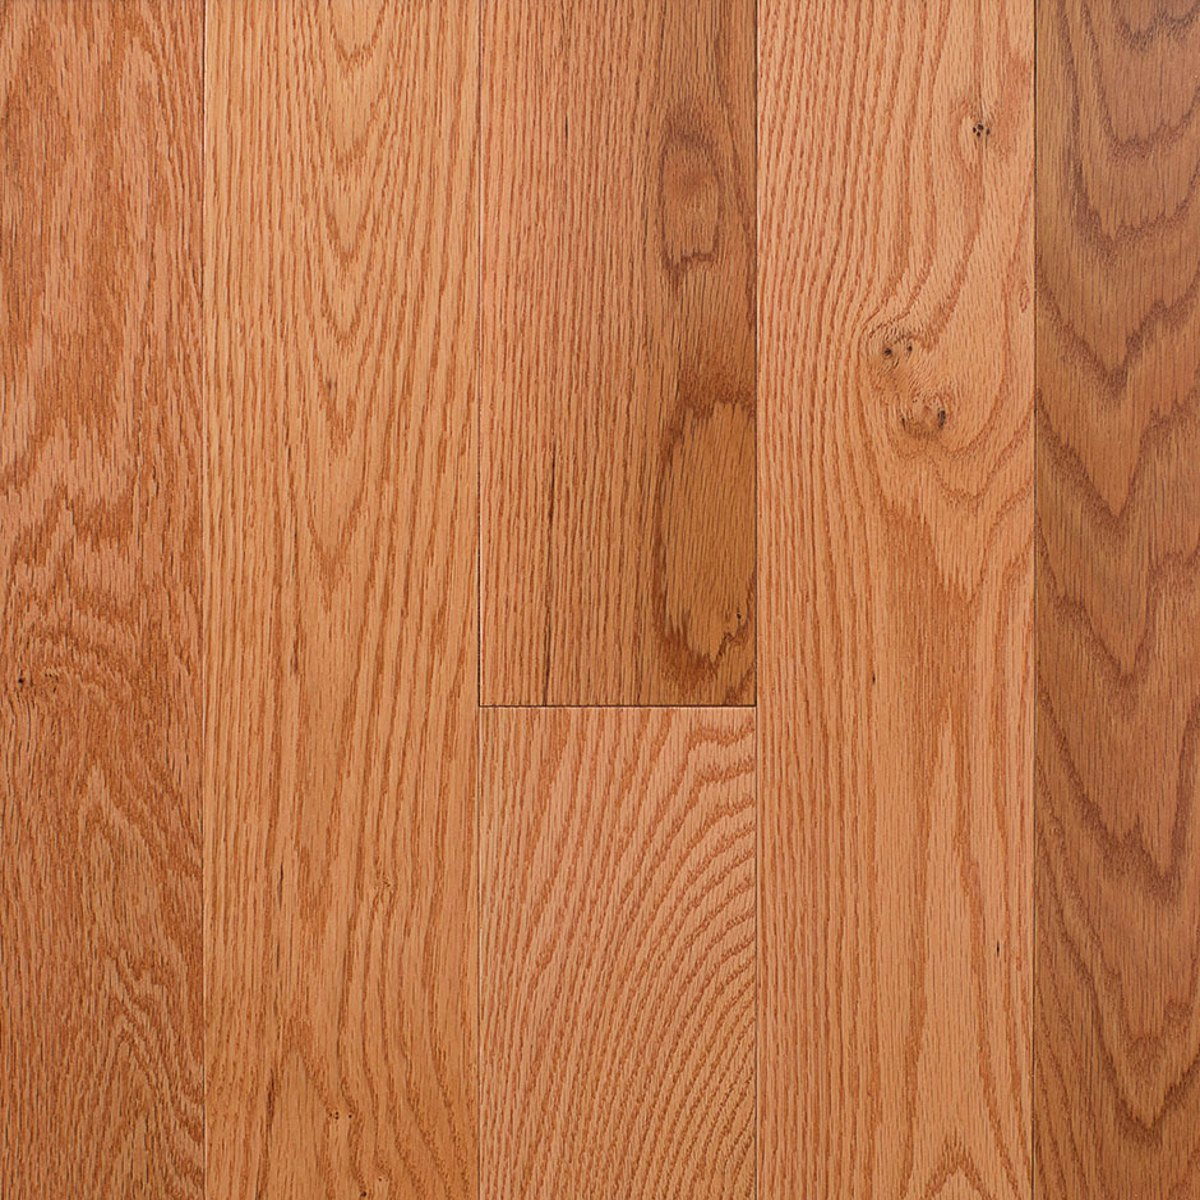 Wickham Red Oak Natural Solid Hardwood Flooring